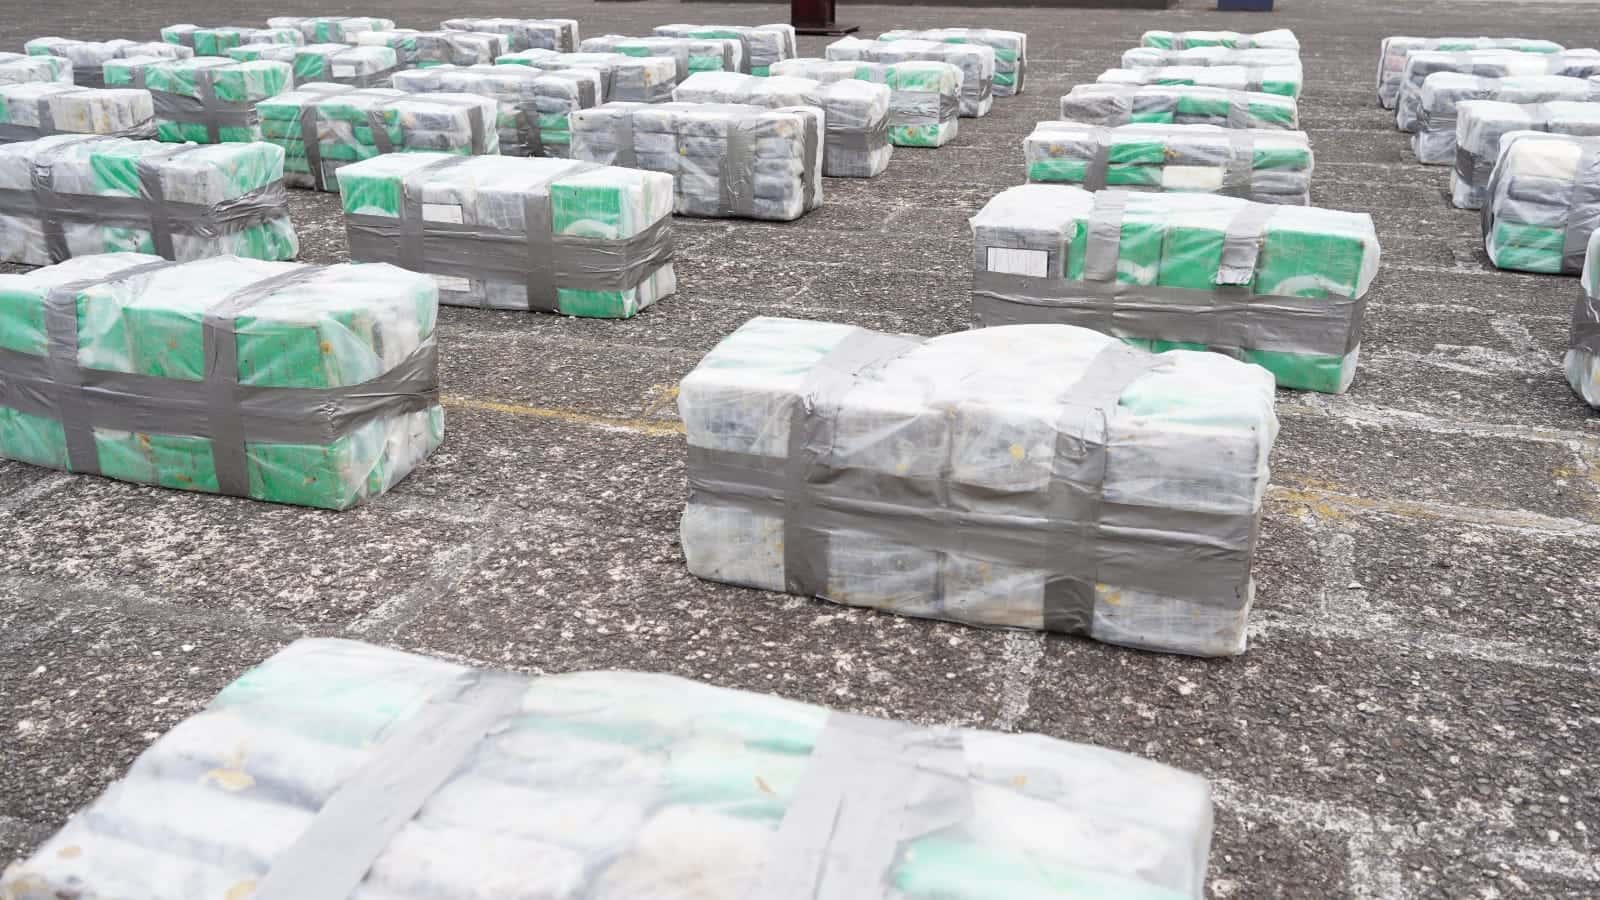 Narco mete droga en contenedor cargado de fruta fresca que iba para España